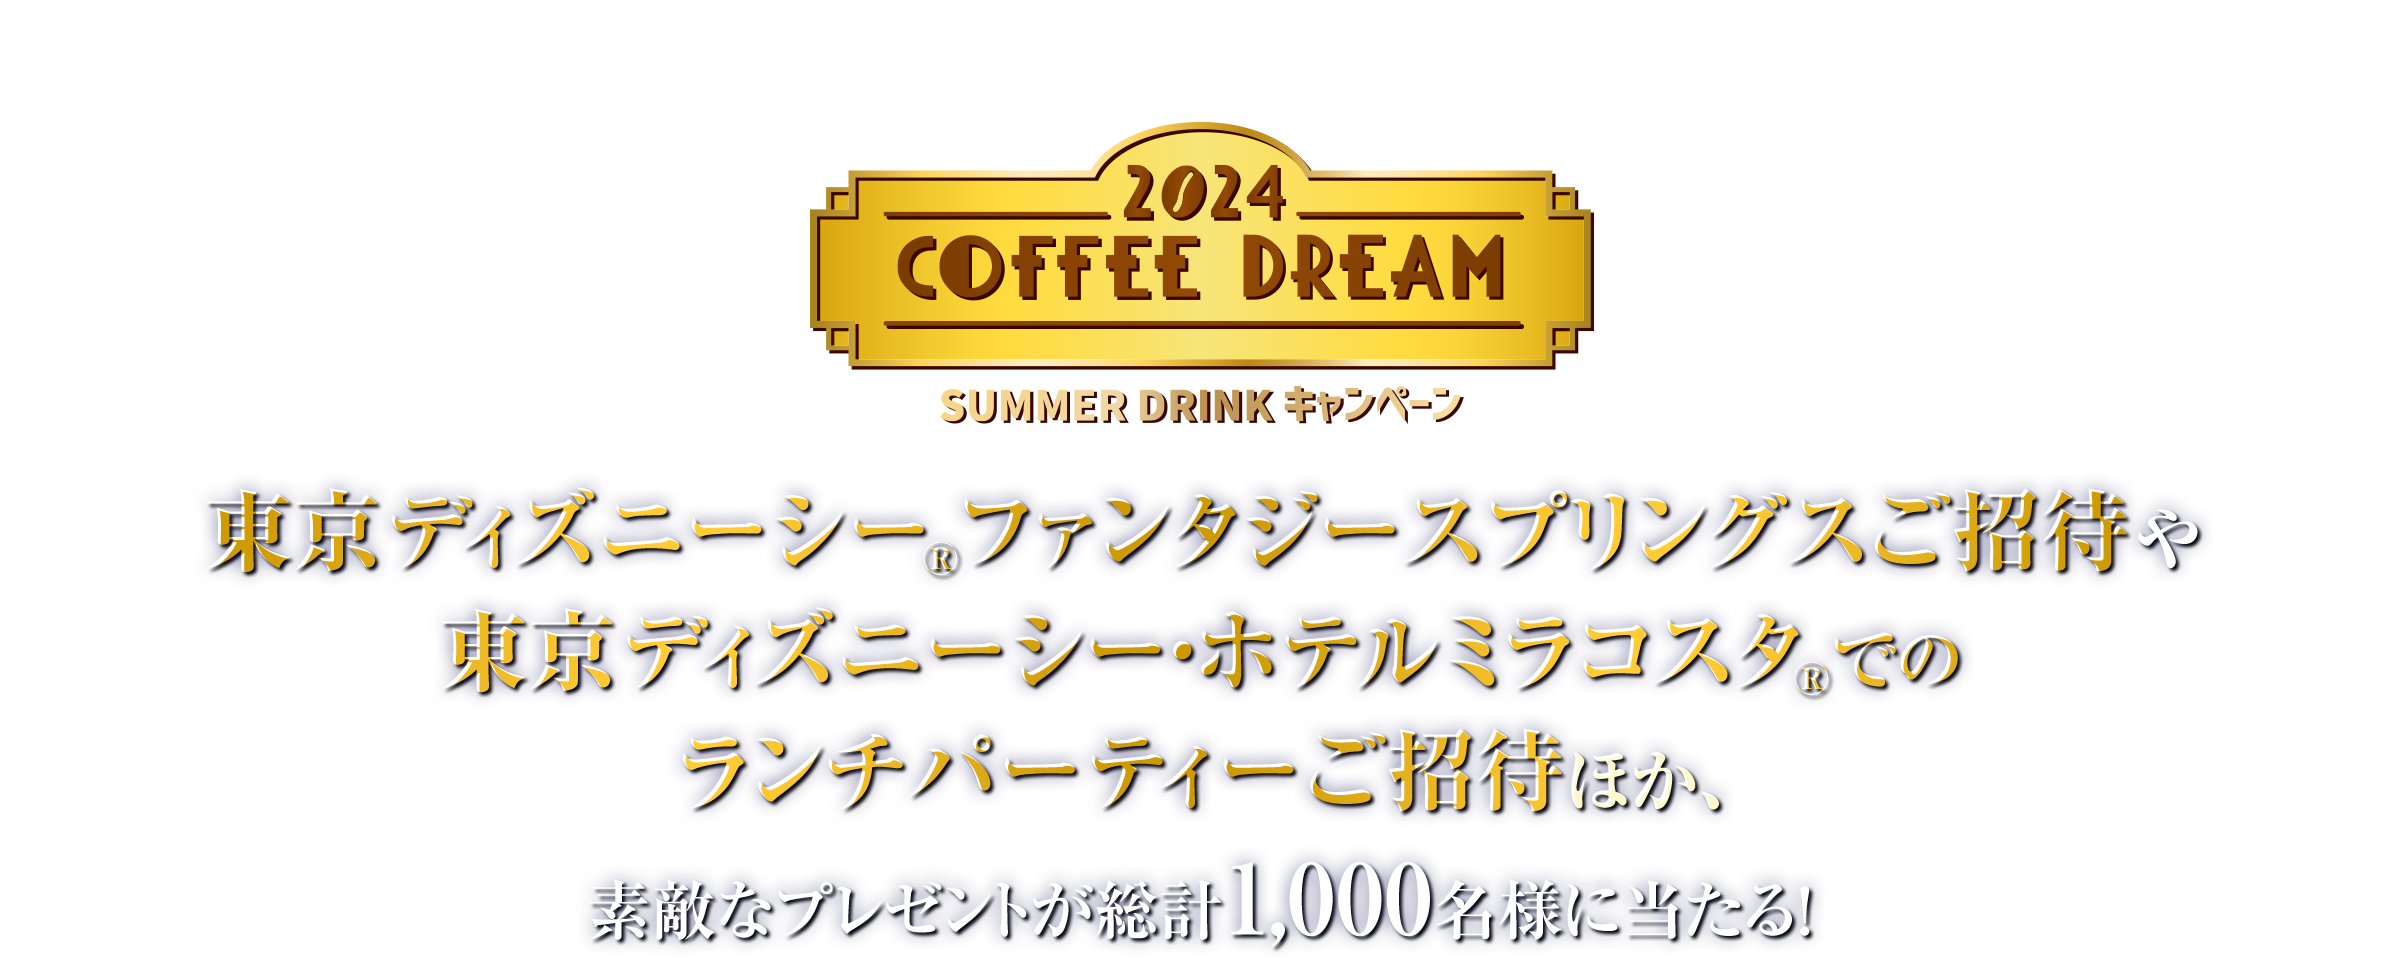 2024 COFFEE DREAM SUMMER DRINK キャンペーン 東京ディズニーシー®ファンタジースプリングスご招待 東京ディズニーシー・ホテルミラコスタ®でのランチパーティーご招待ほか、素敵なプレゼントが総計1,000名様に当たる!